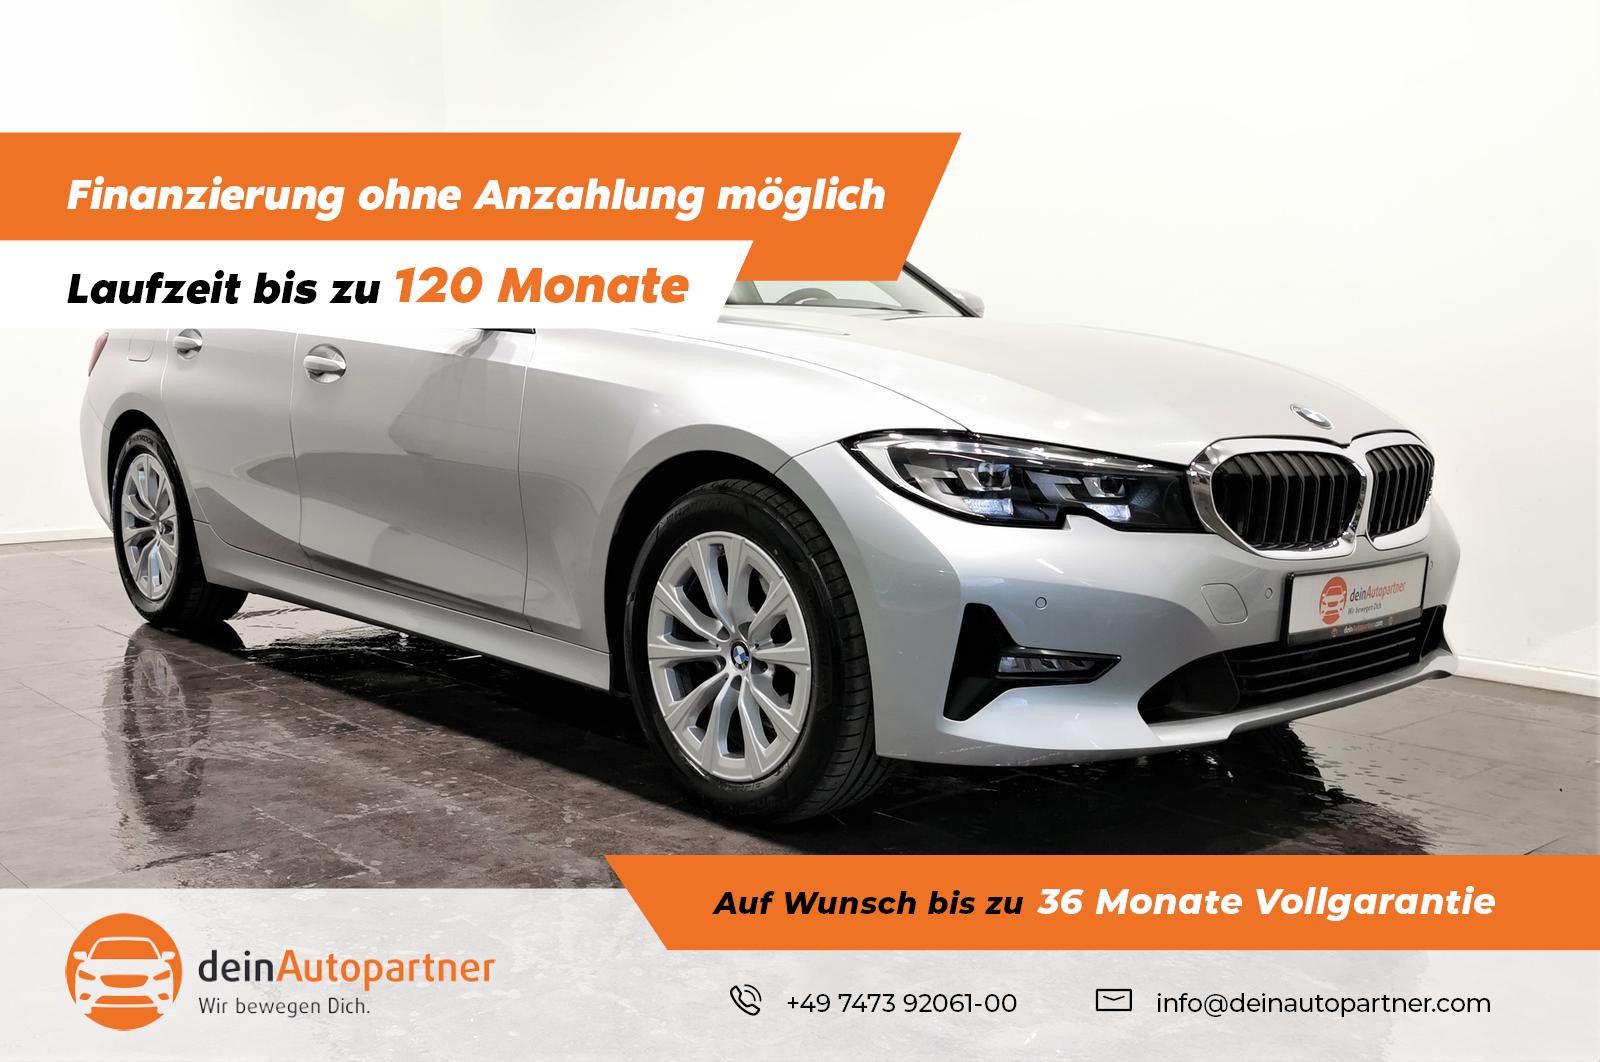 BMW 3er Touring: Modelle, technische Daten, Hybrid & Preise (G21)